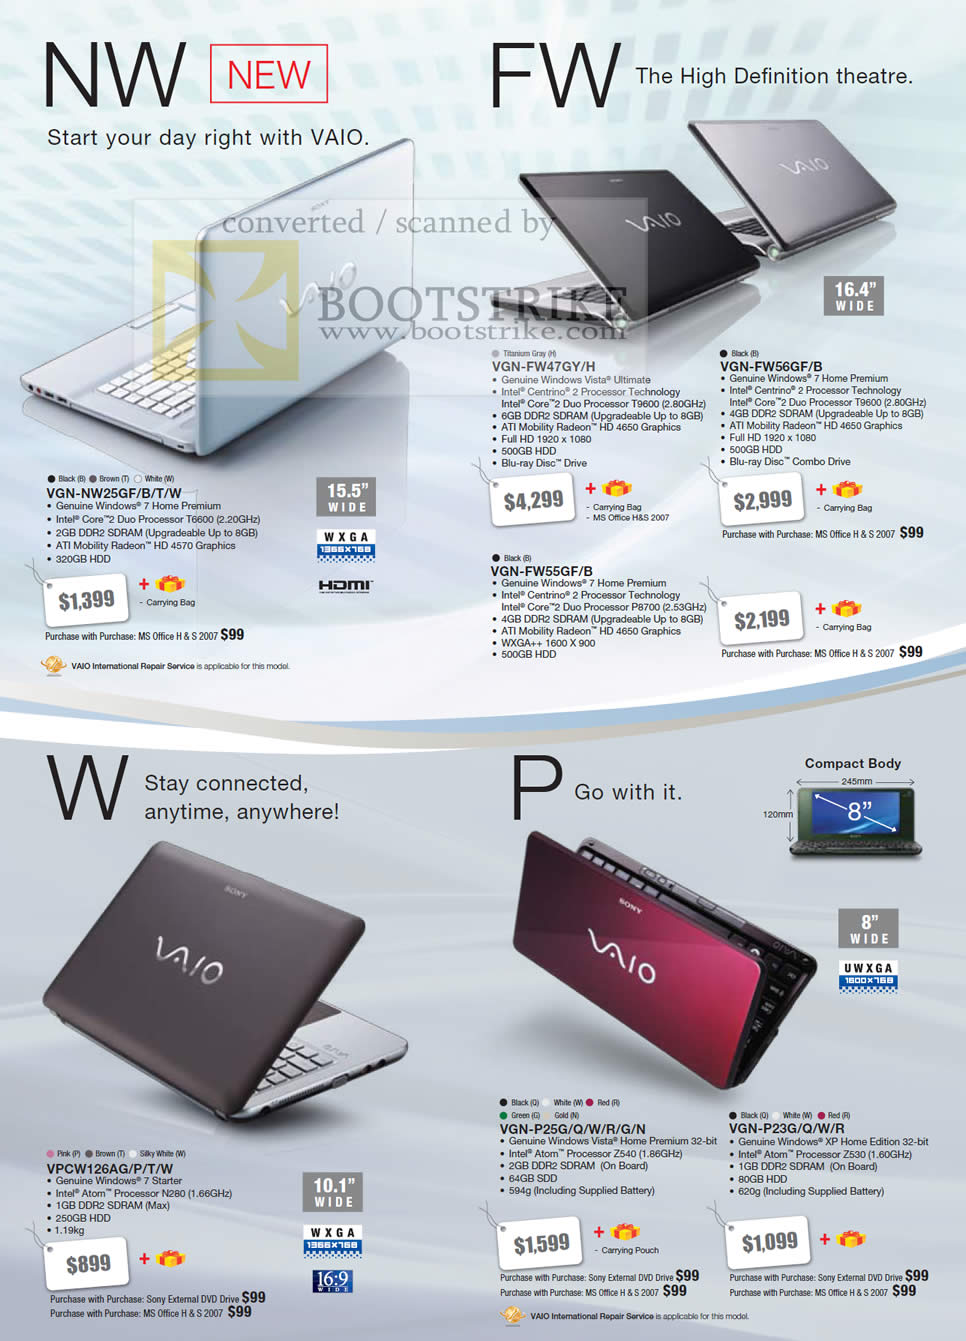 Sitex 2009 price list image brochure of Sony Vaio NW Series FW Series W Series P Series